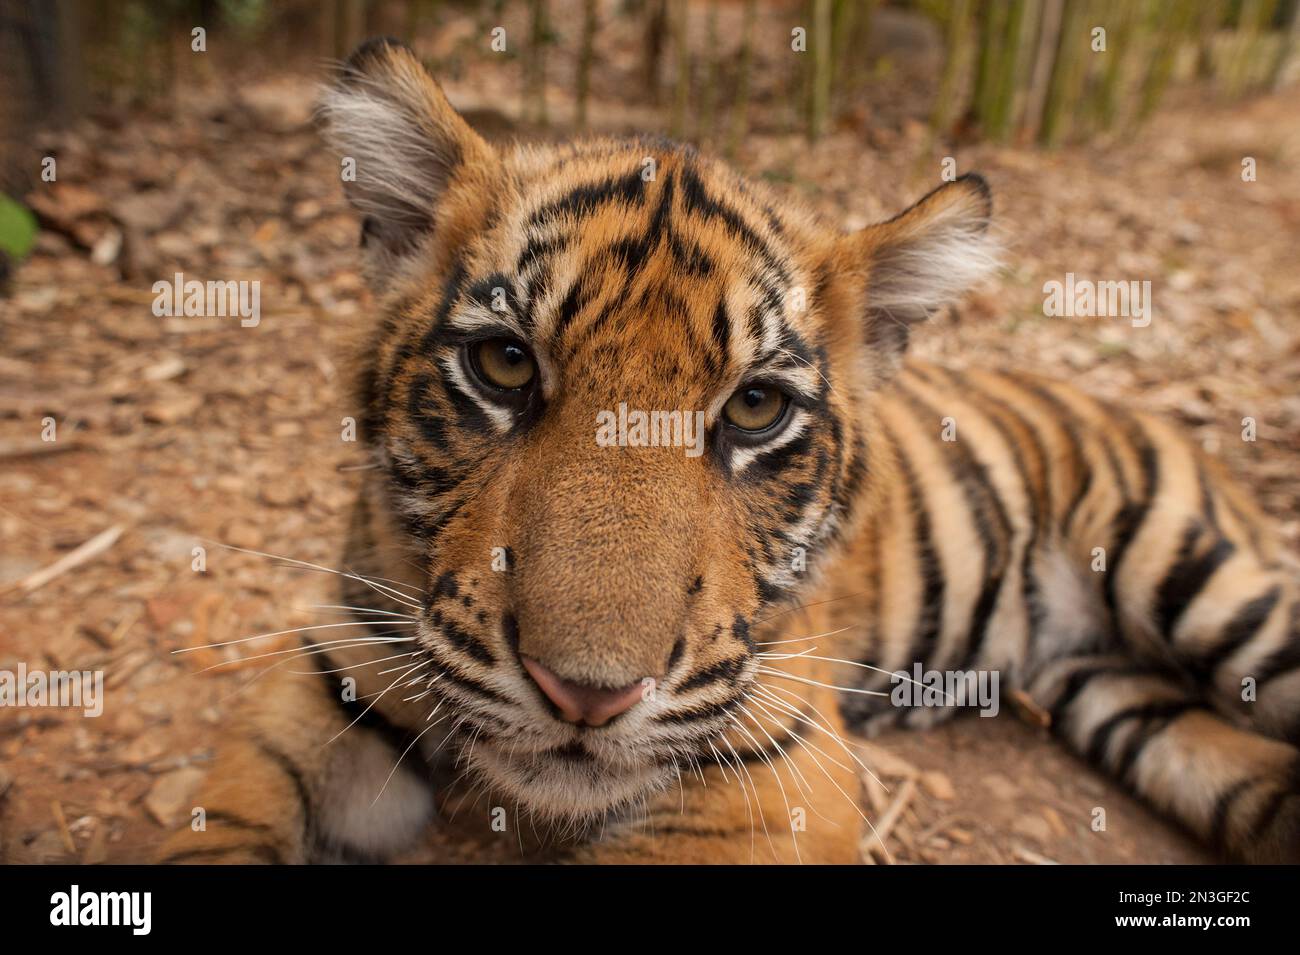 Close-up portrait of the critically-endangered Sumatran tiger cub (Panthera tigris sumatrae) lying on the ground Stock Photo